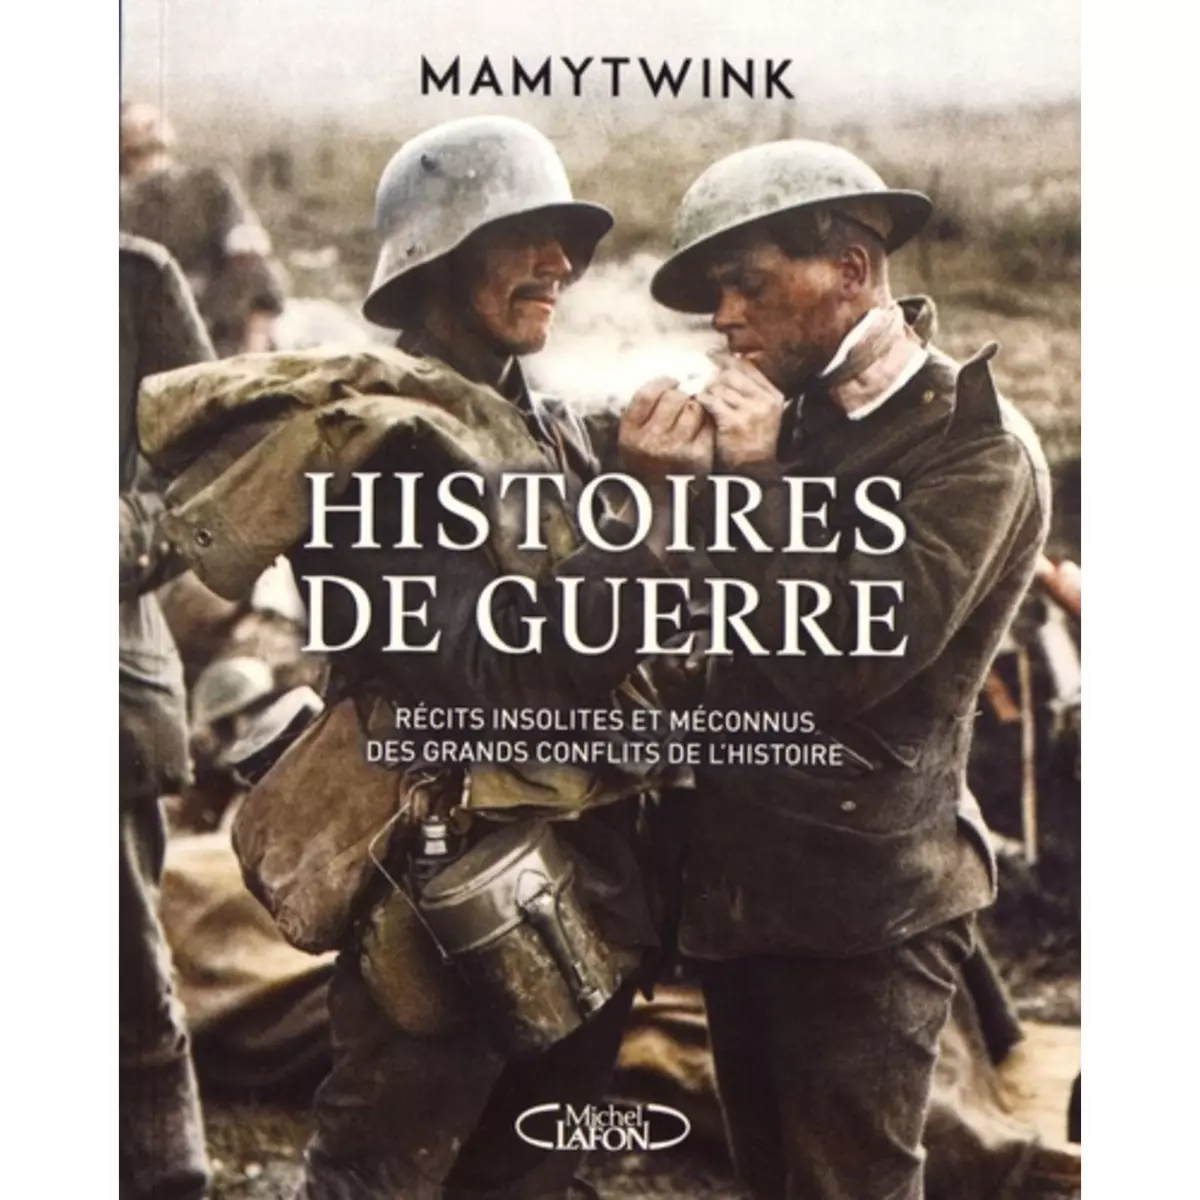  HISTOIRES DE GUERRE, Mamytwink